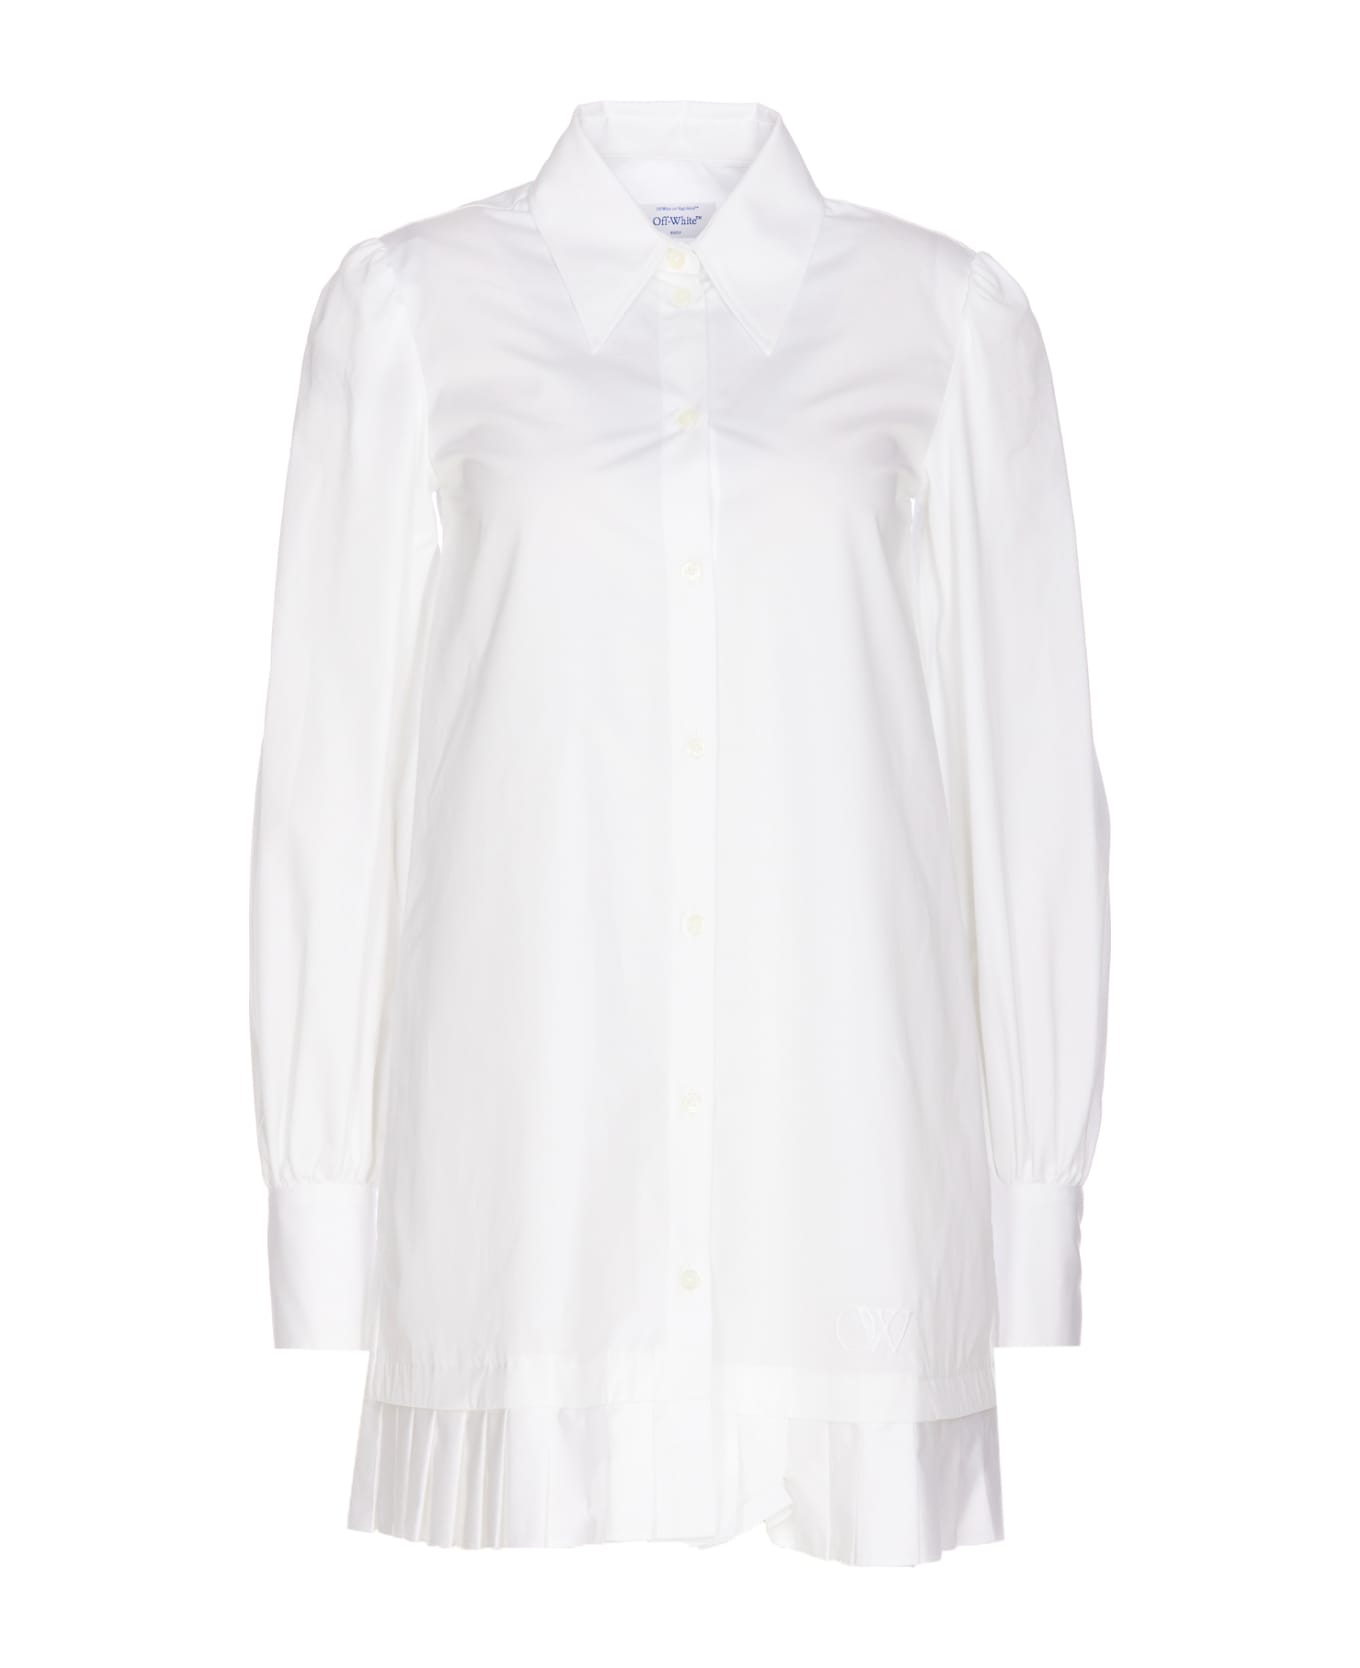 Off-White Overshirt Dress - White